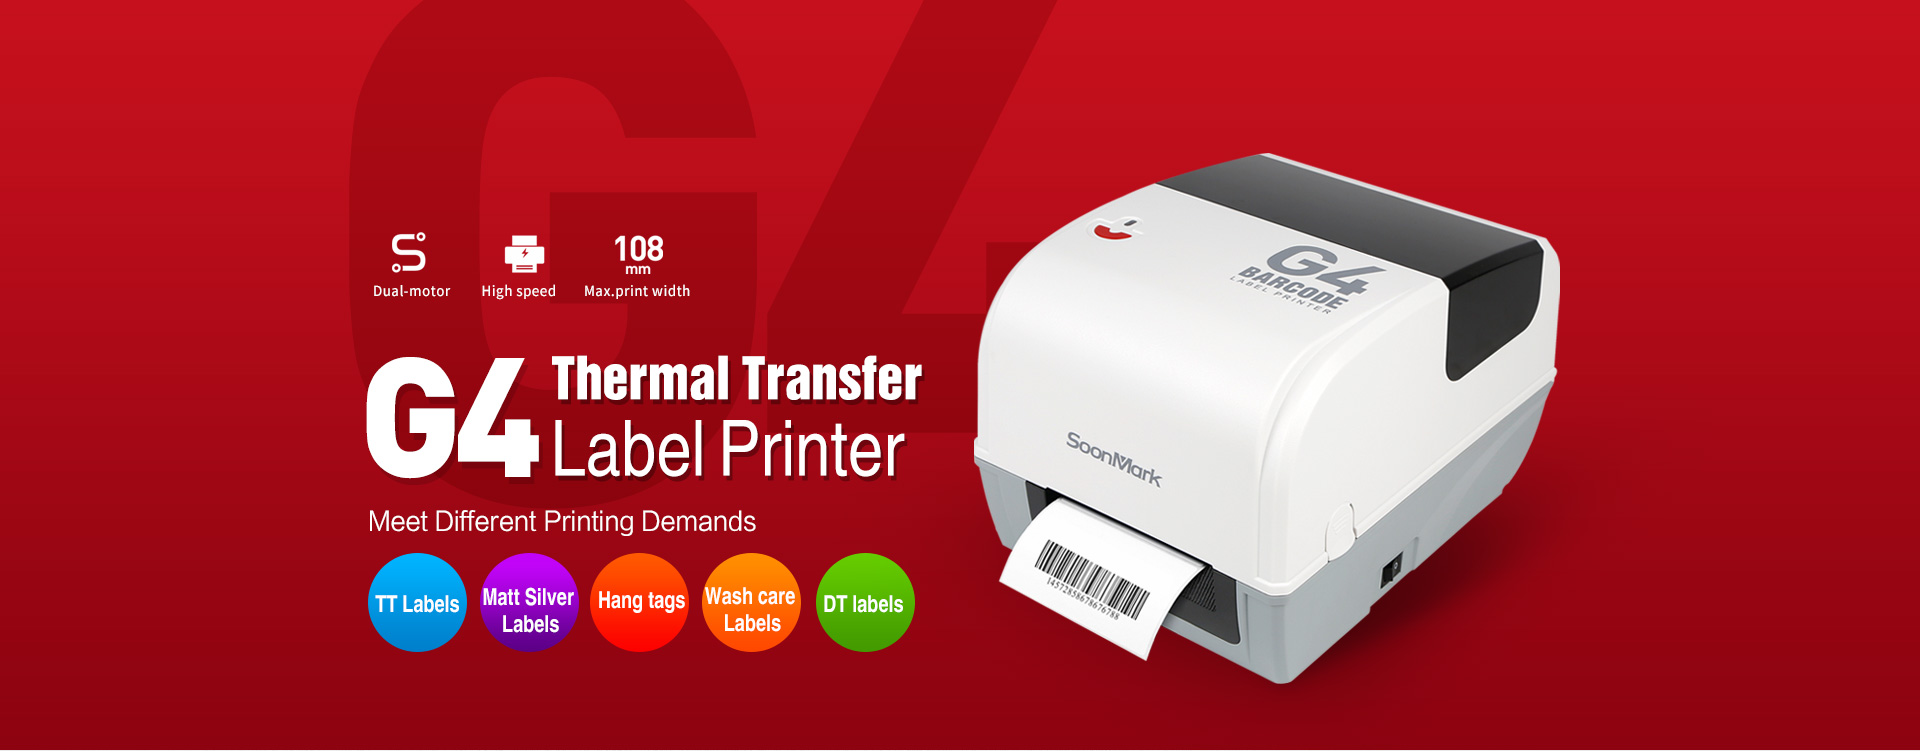 G4 thermal transfer printer